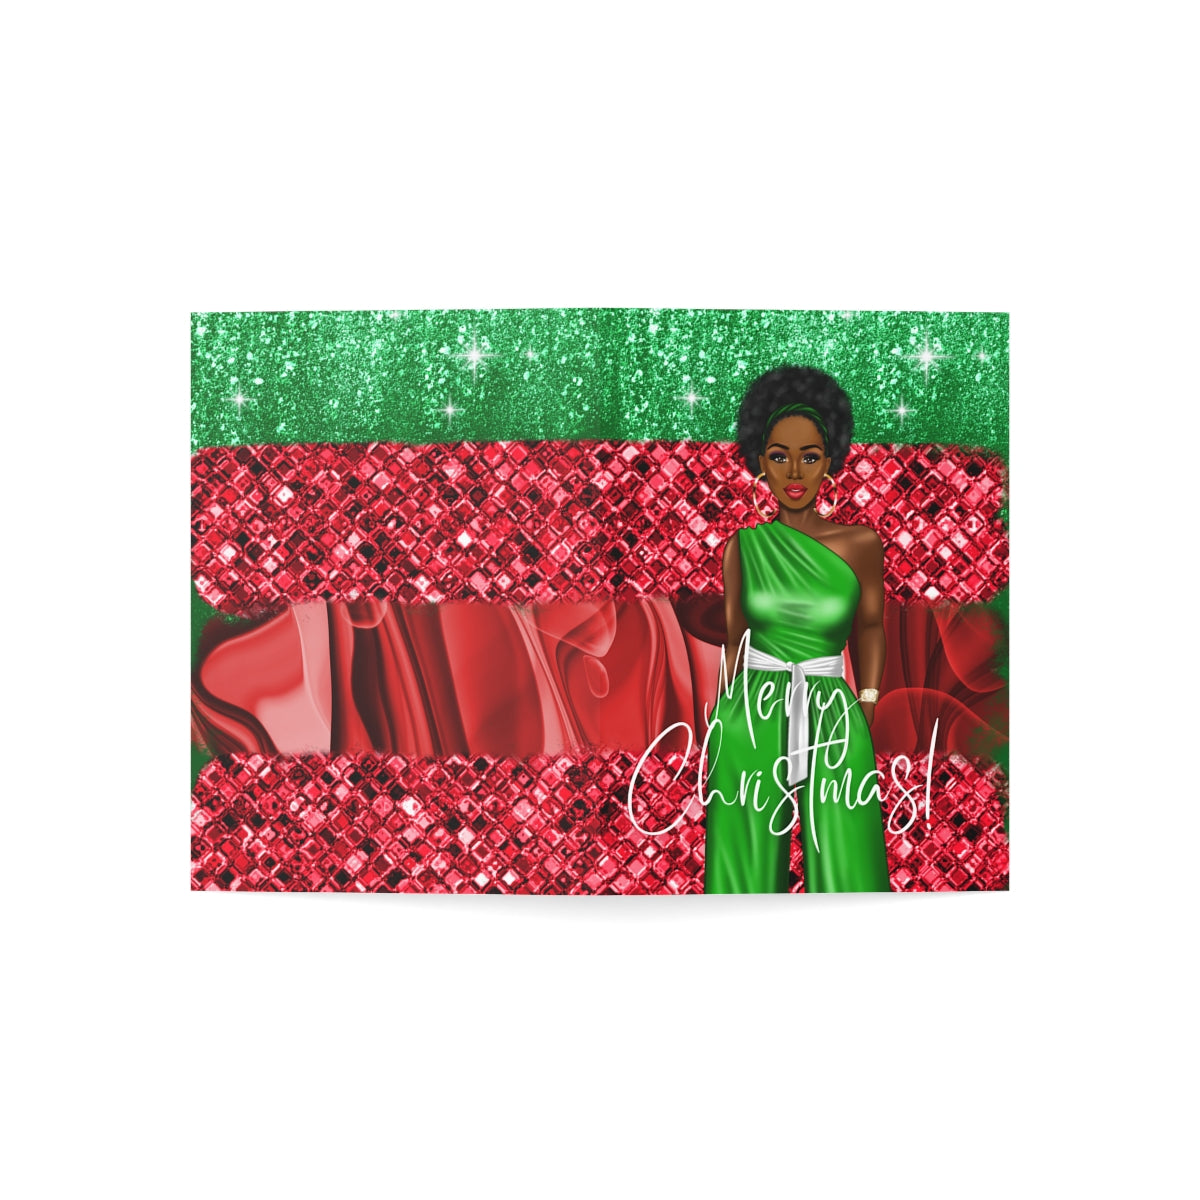 Black Woman Christmas Greeting Cards (1, 10, 30, and 50pcs)